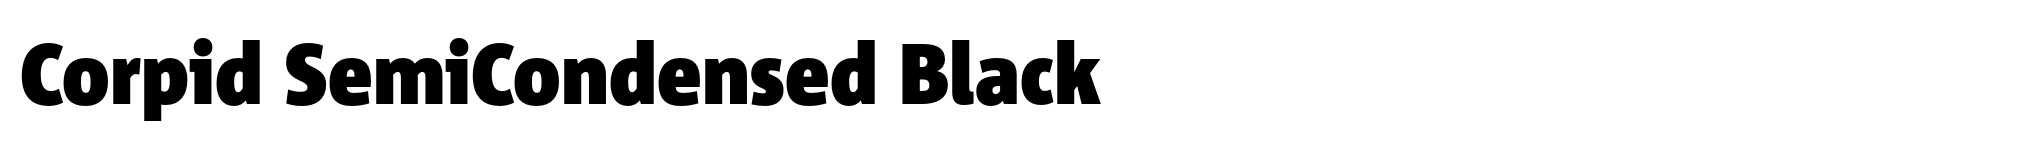 Corpid SemiCondensed Black image